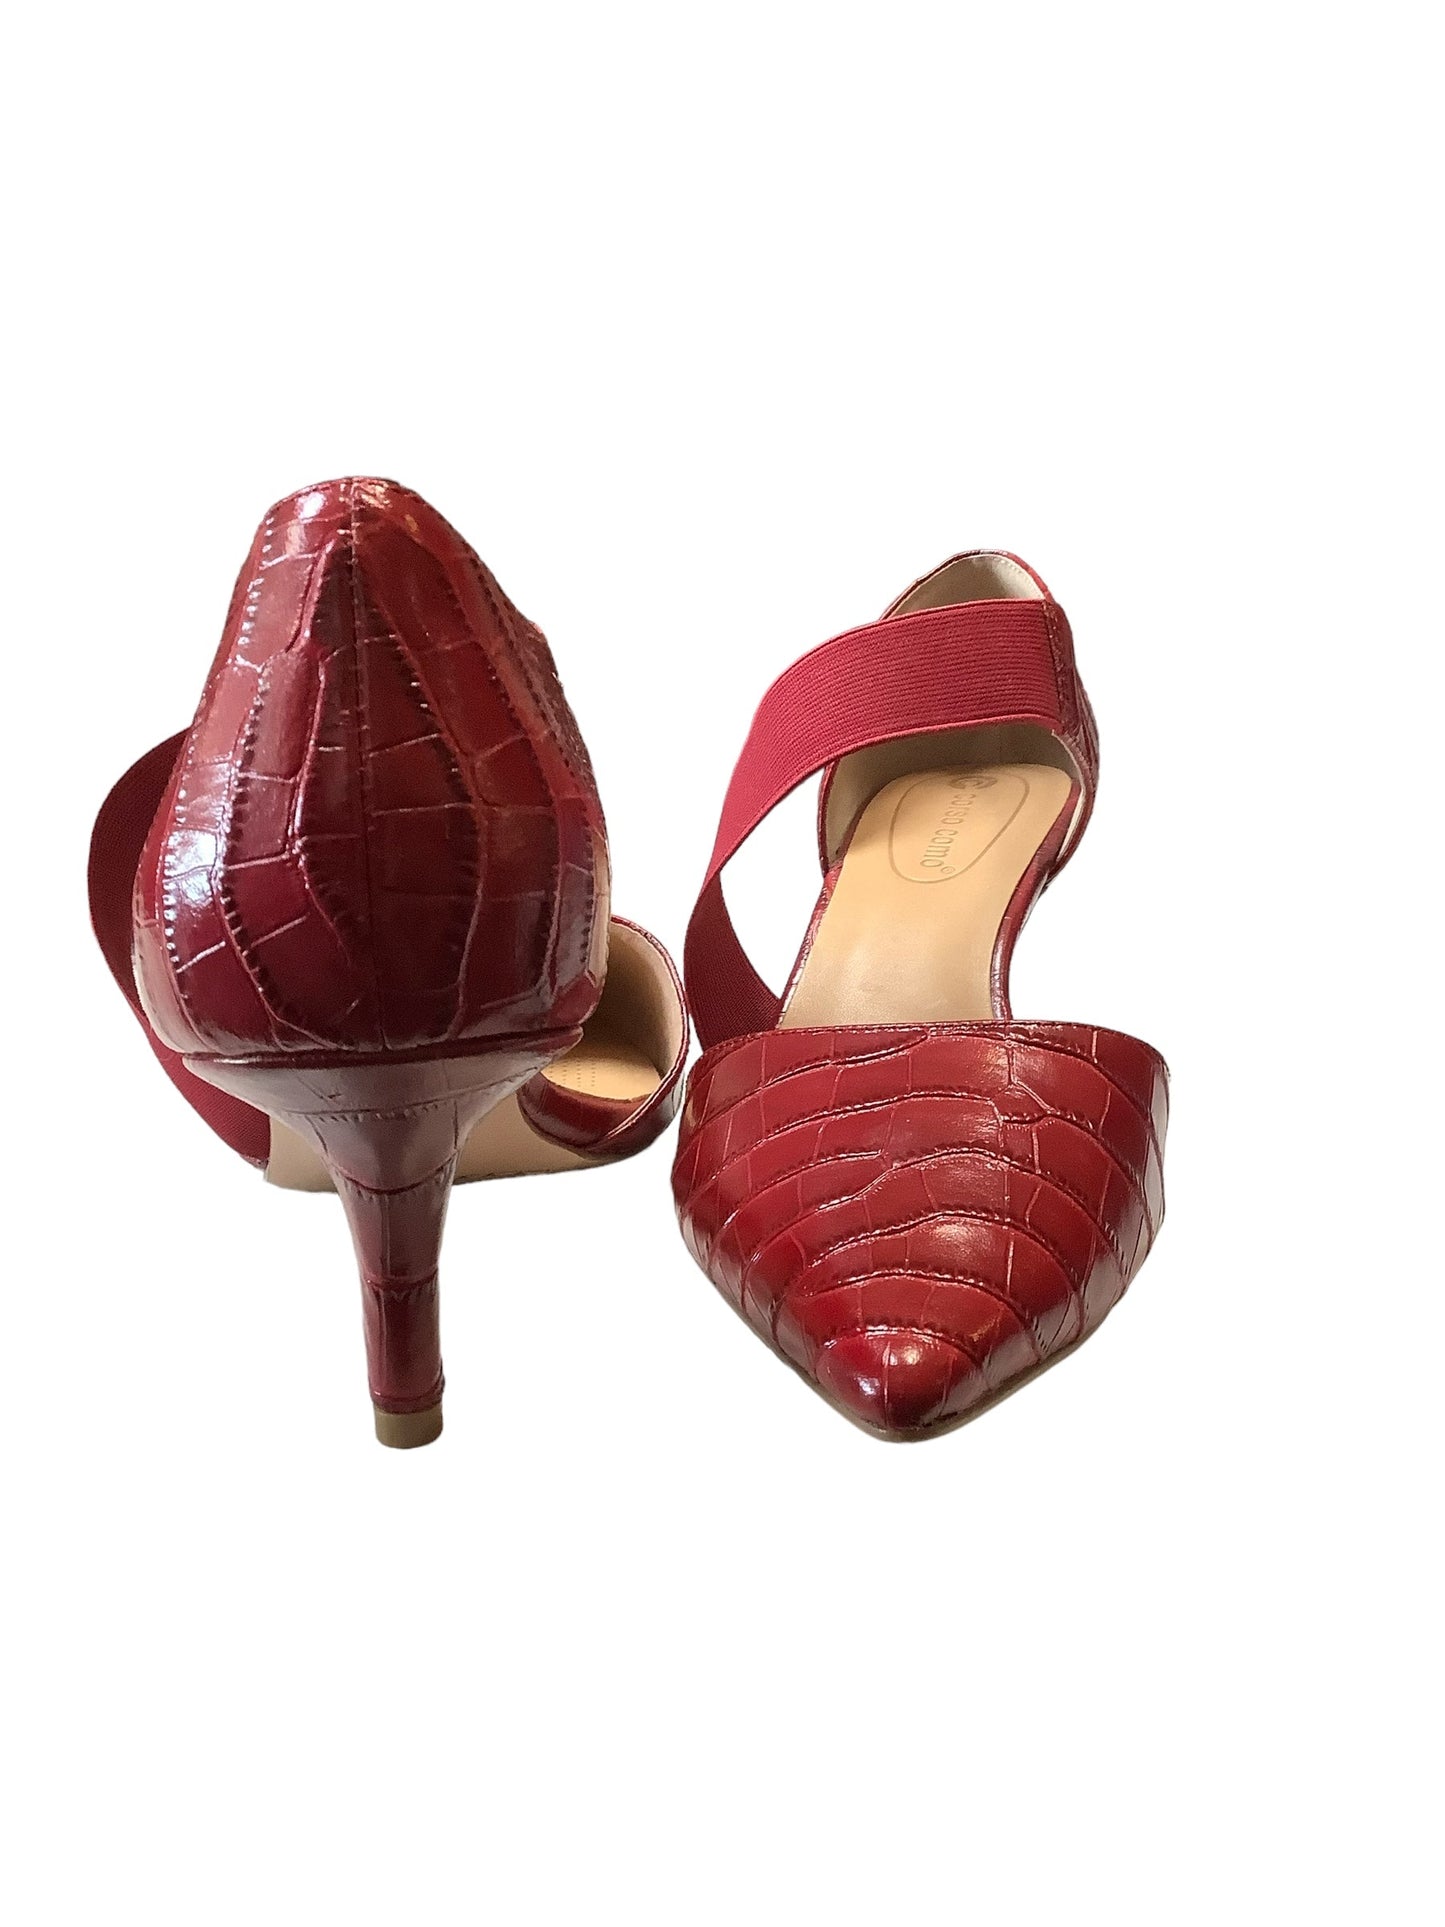 Shoes Heels Stiletto By Corso Como  Size: 9